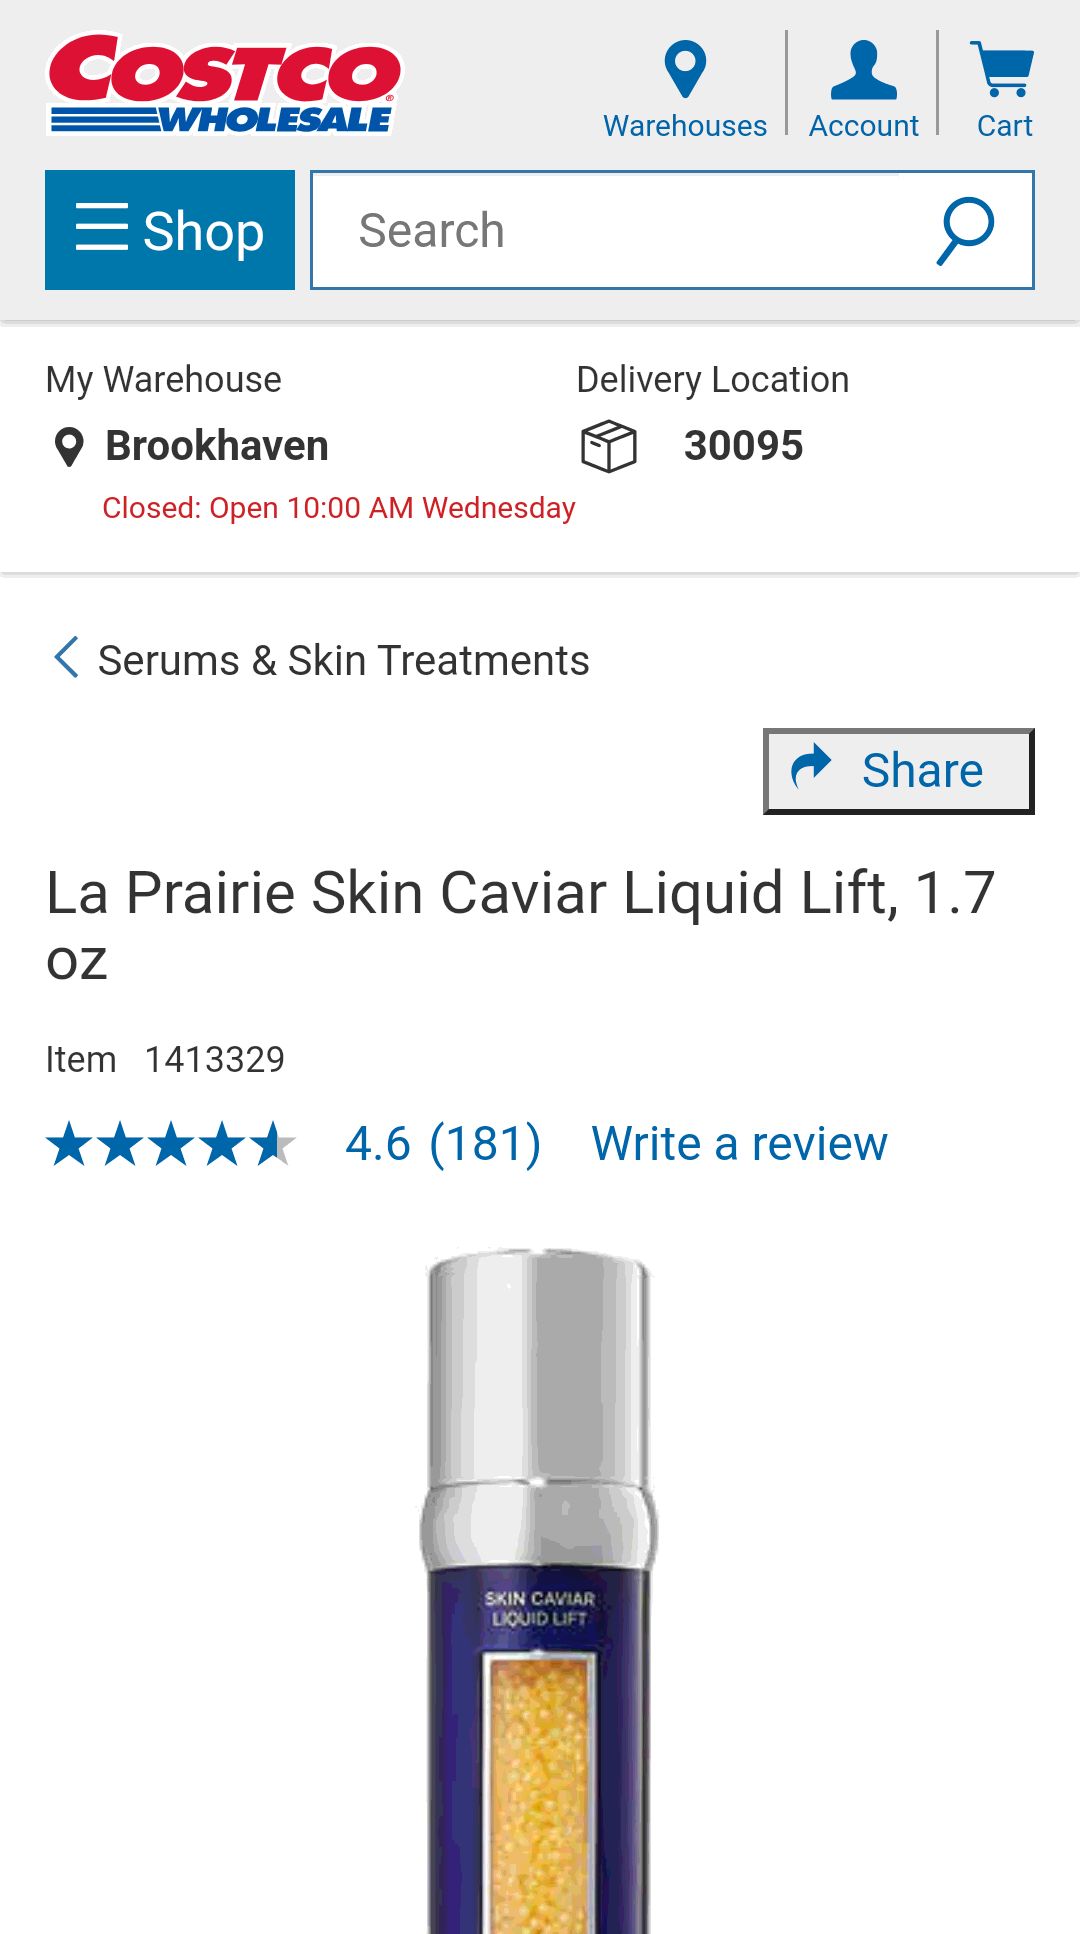 La Prairie Skin Caviar Liquid Lift, 1.7 oz | Costco